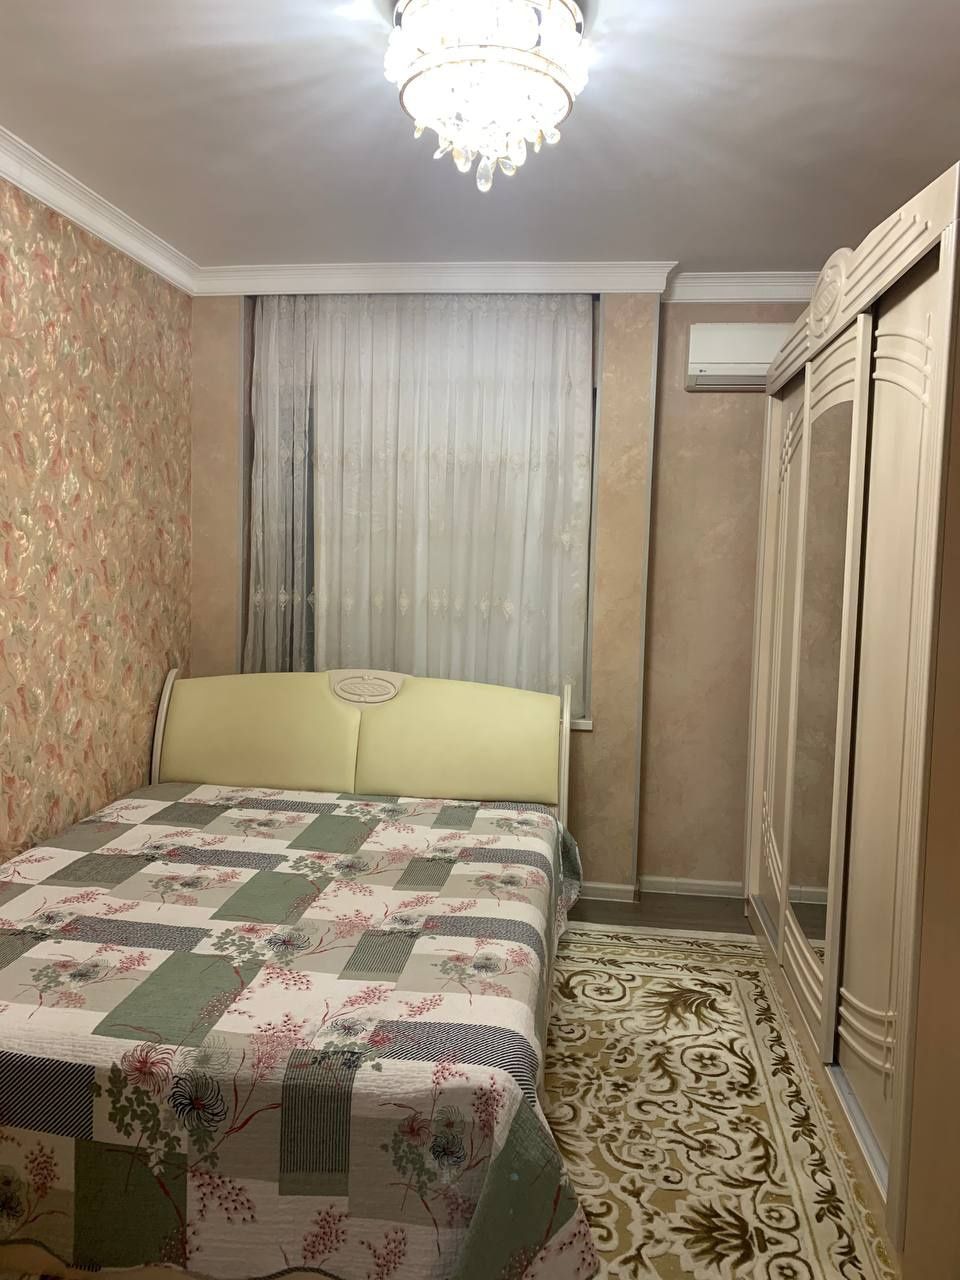 Евролюкс квартира в сердце Ташкенте на Ц1